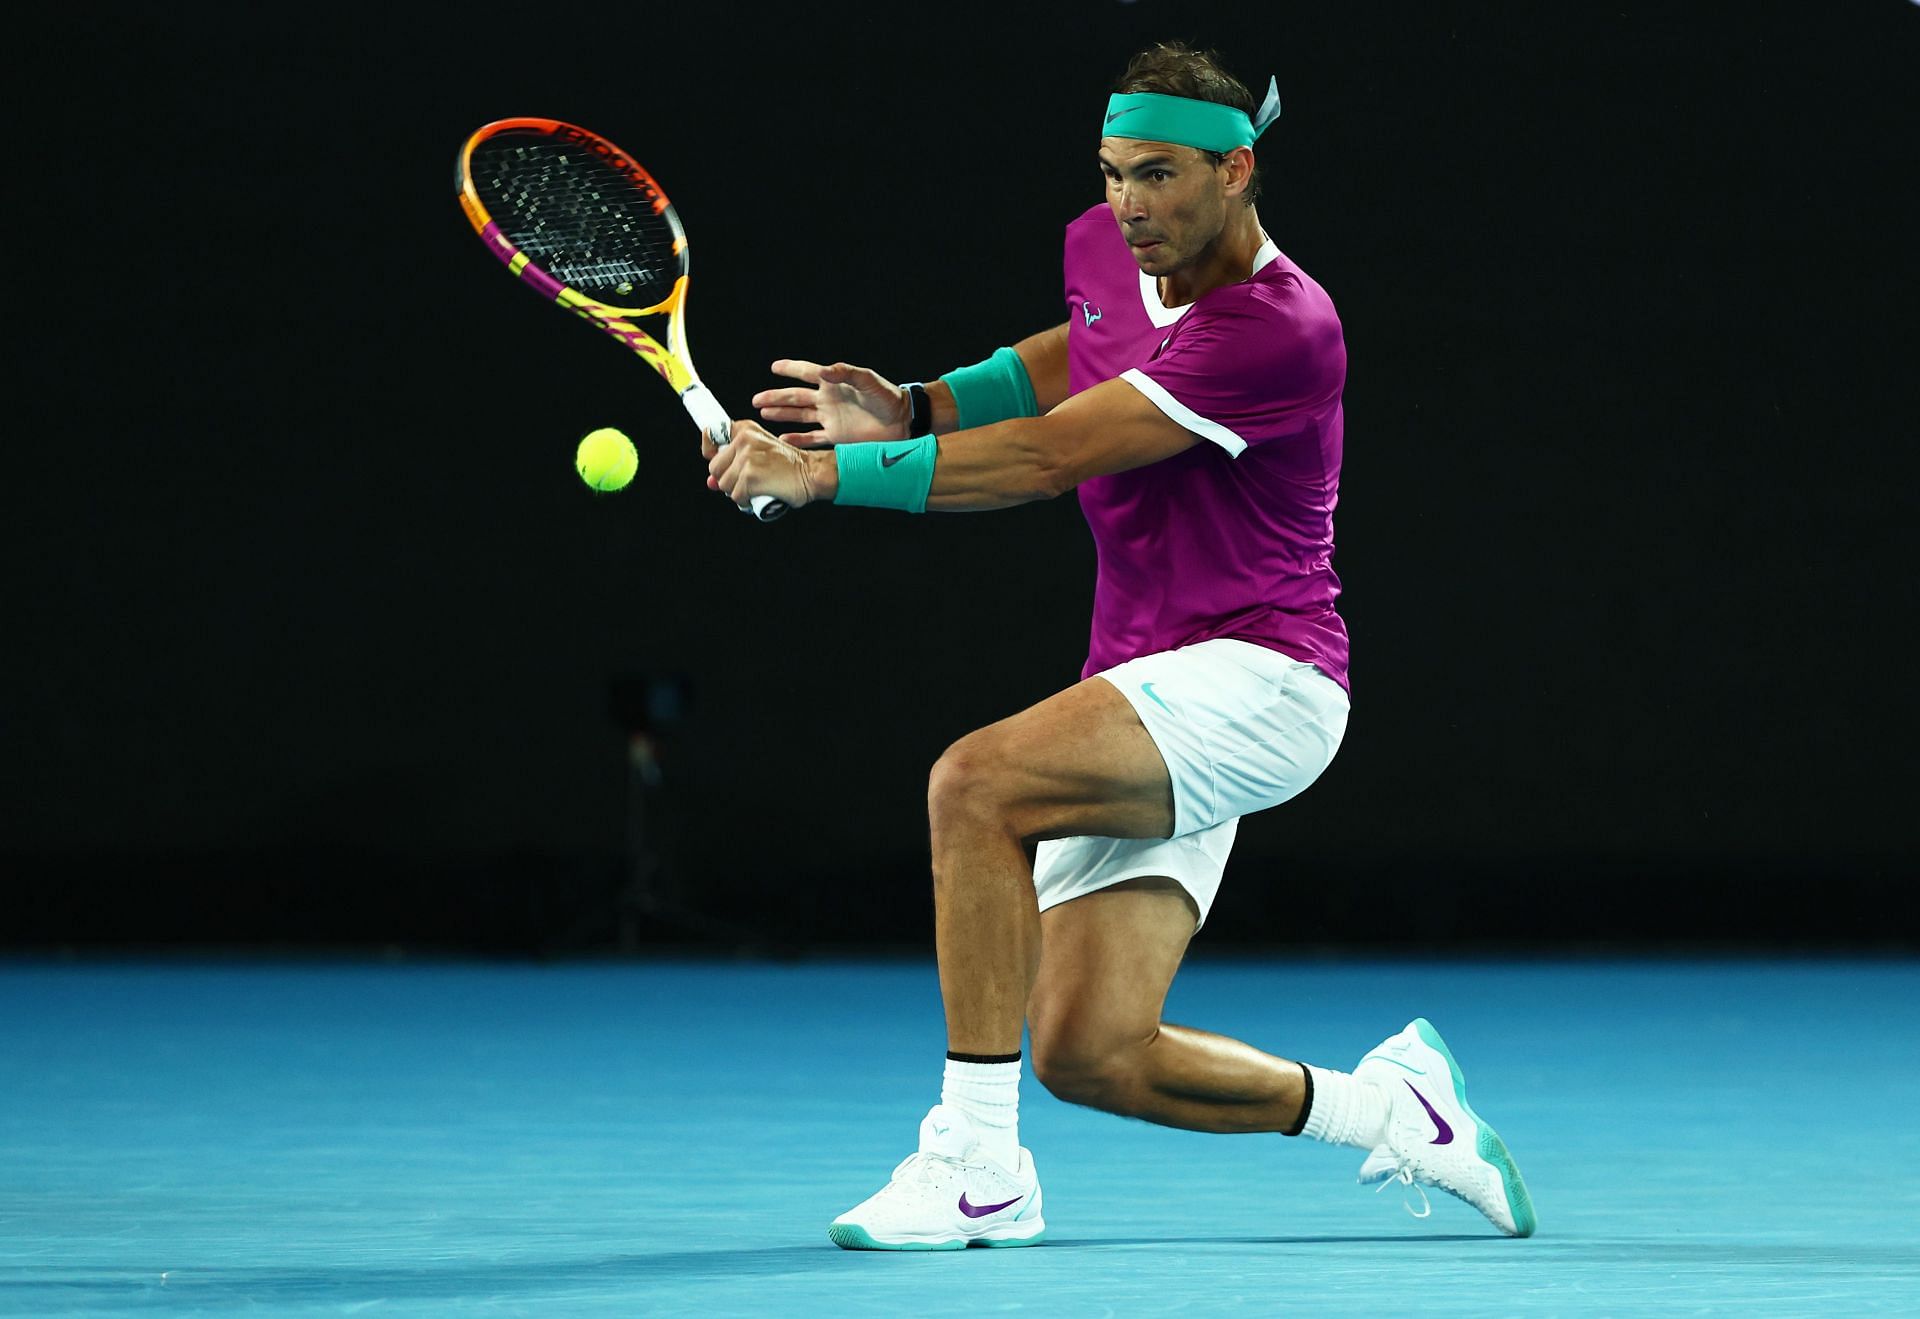 Rafael Nadal faces Adria Mannarino on Day 7 of the Australian Open